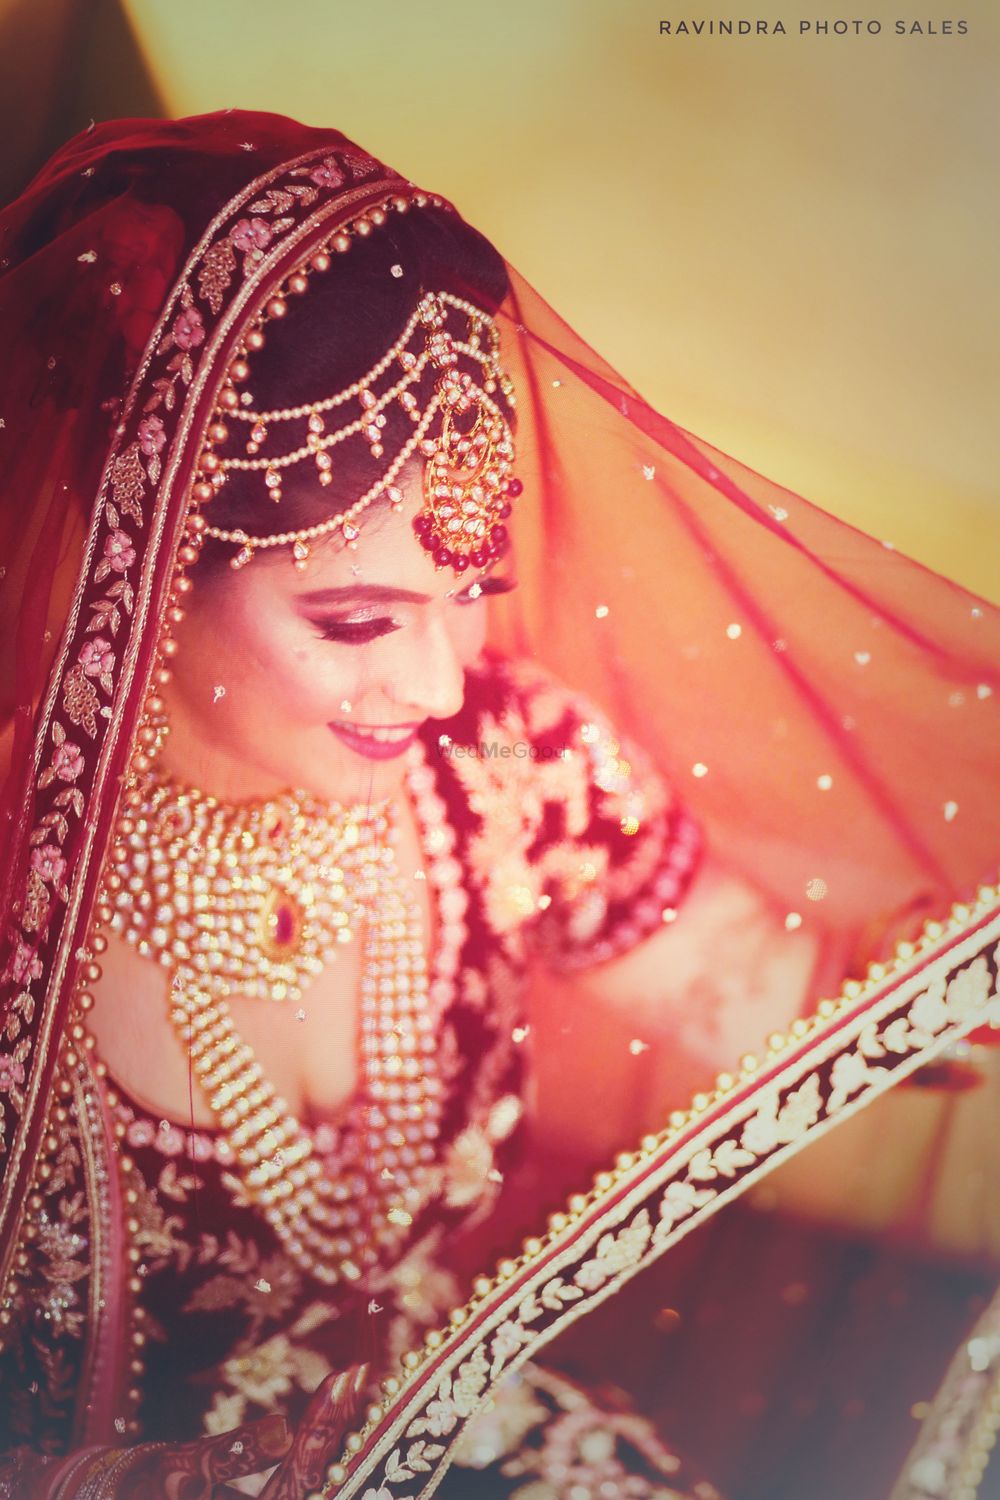 Photo of Lovely bride under veil shot